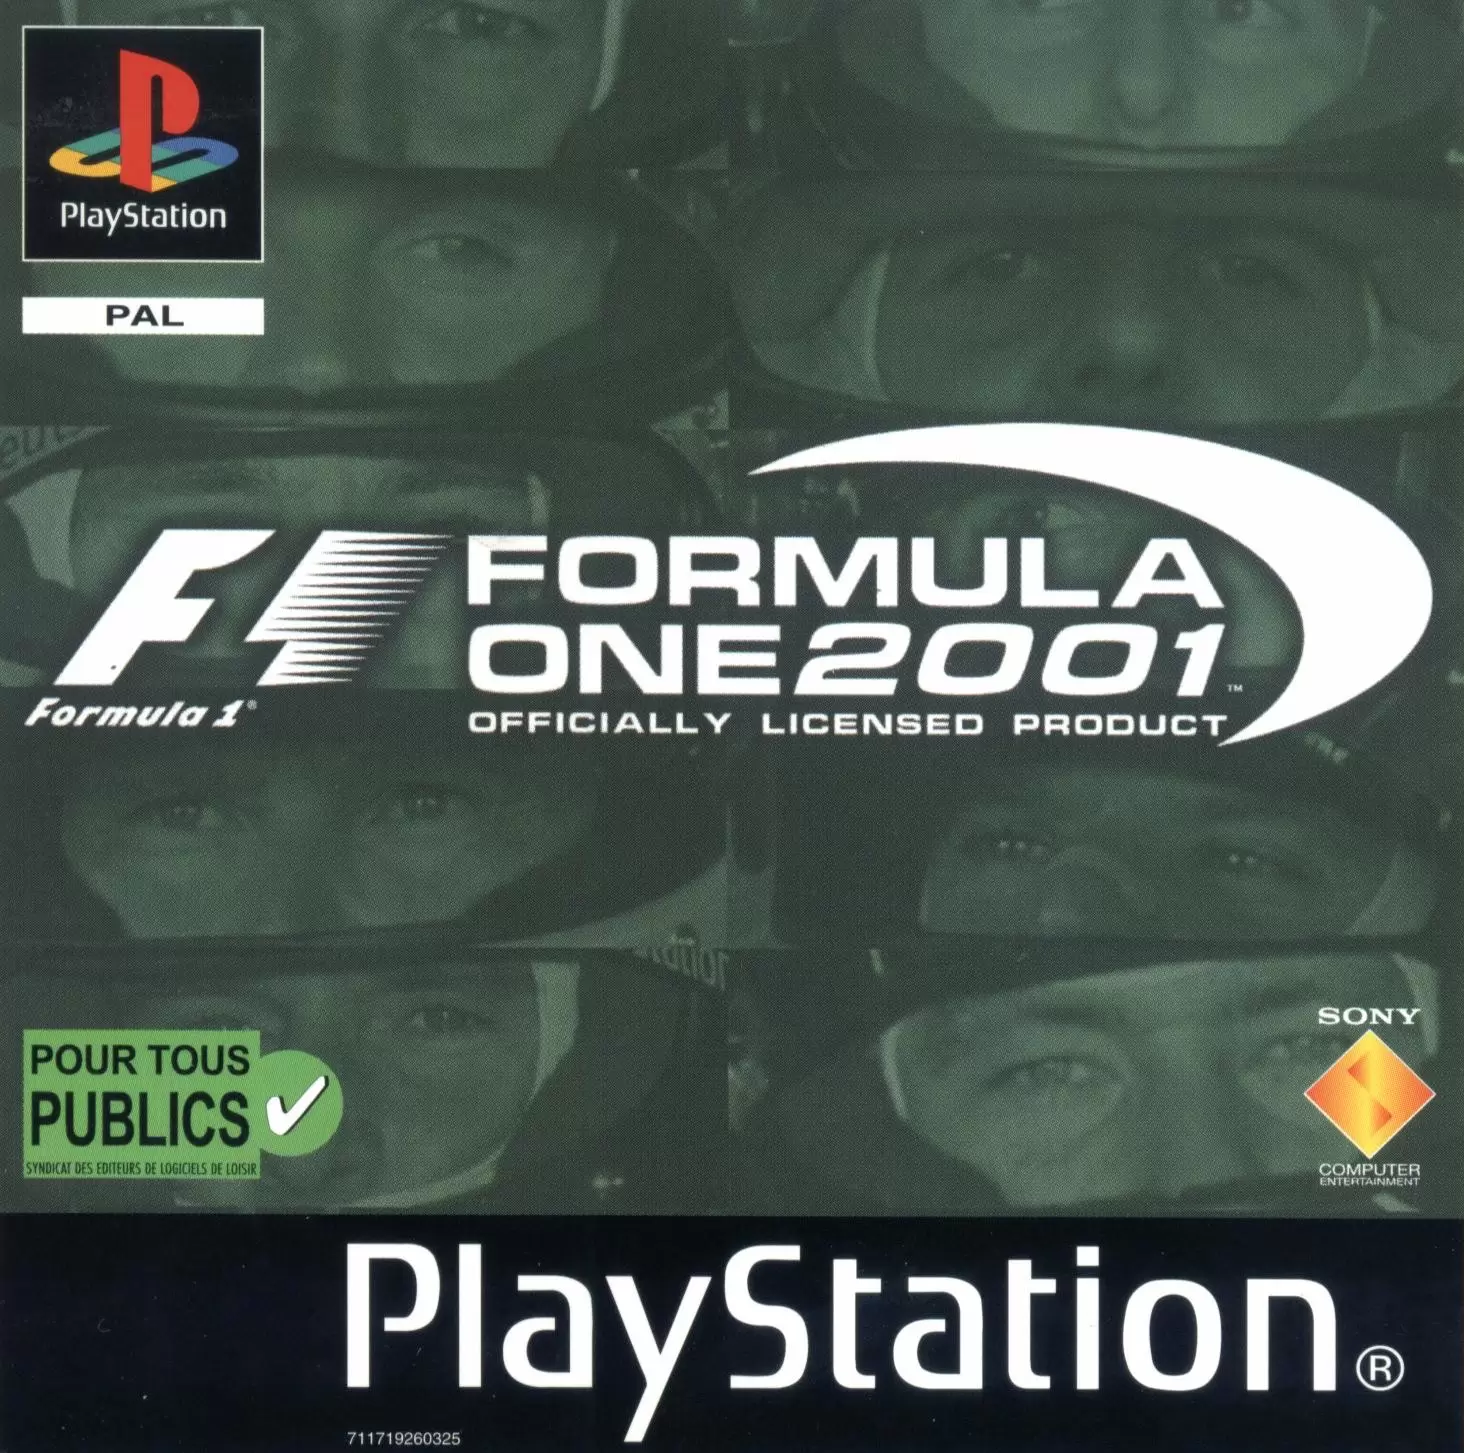 Playstation games - Formula one 2001